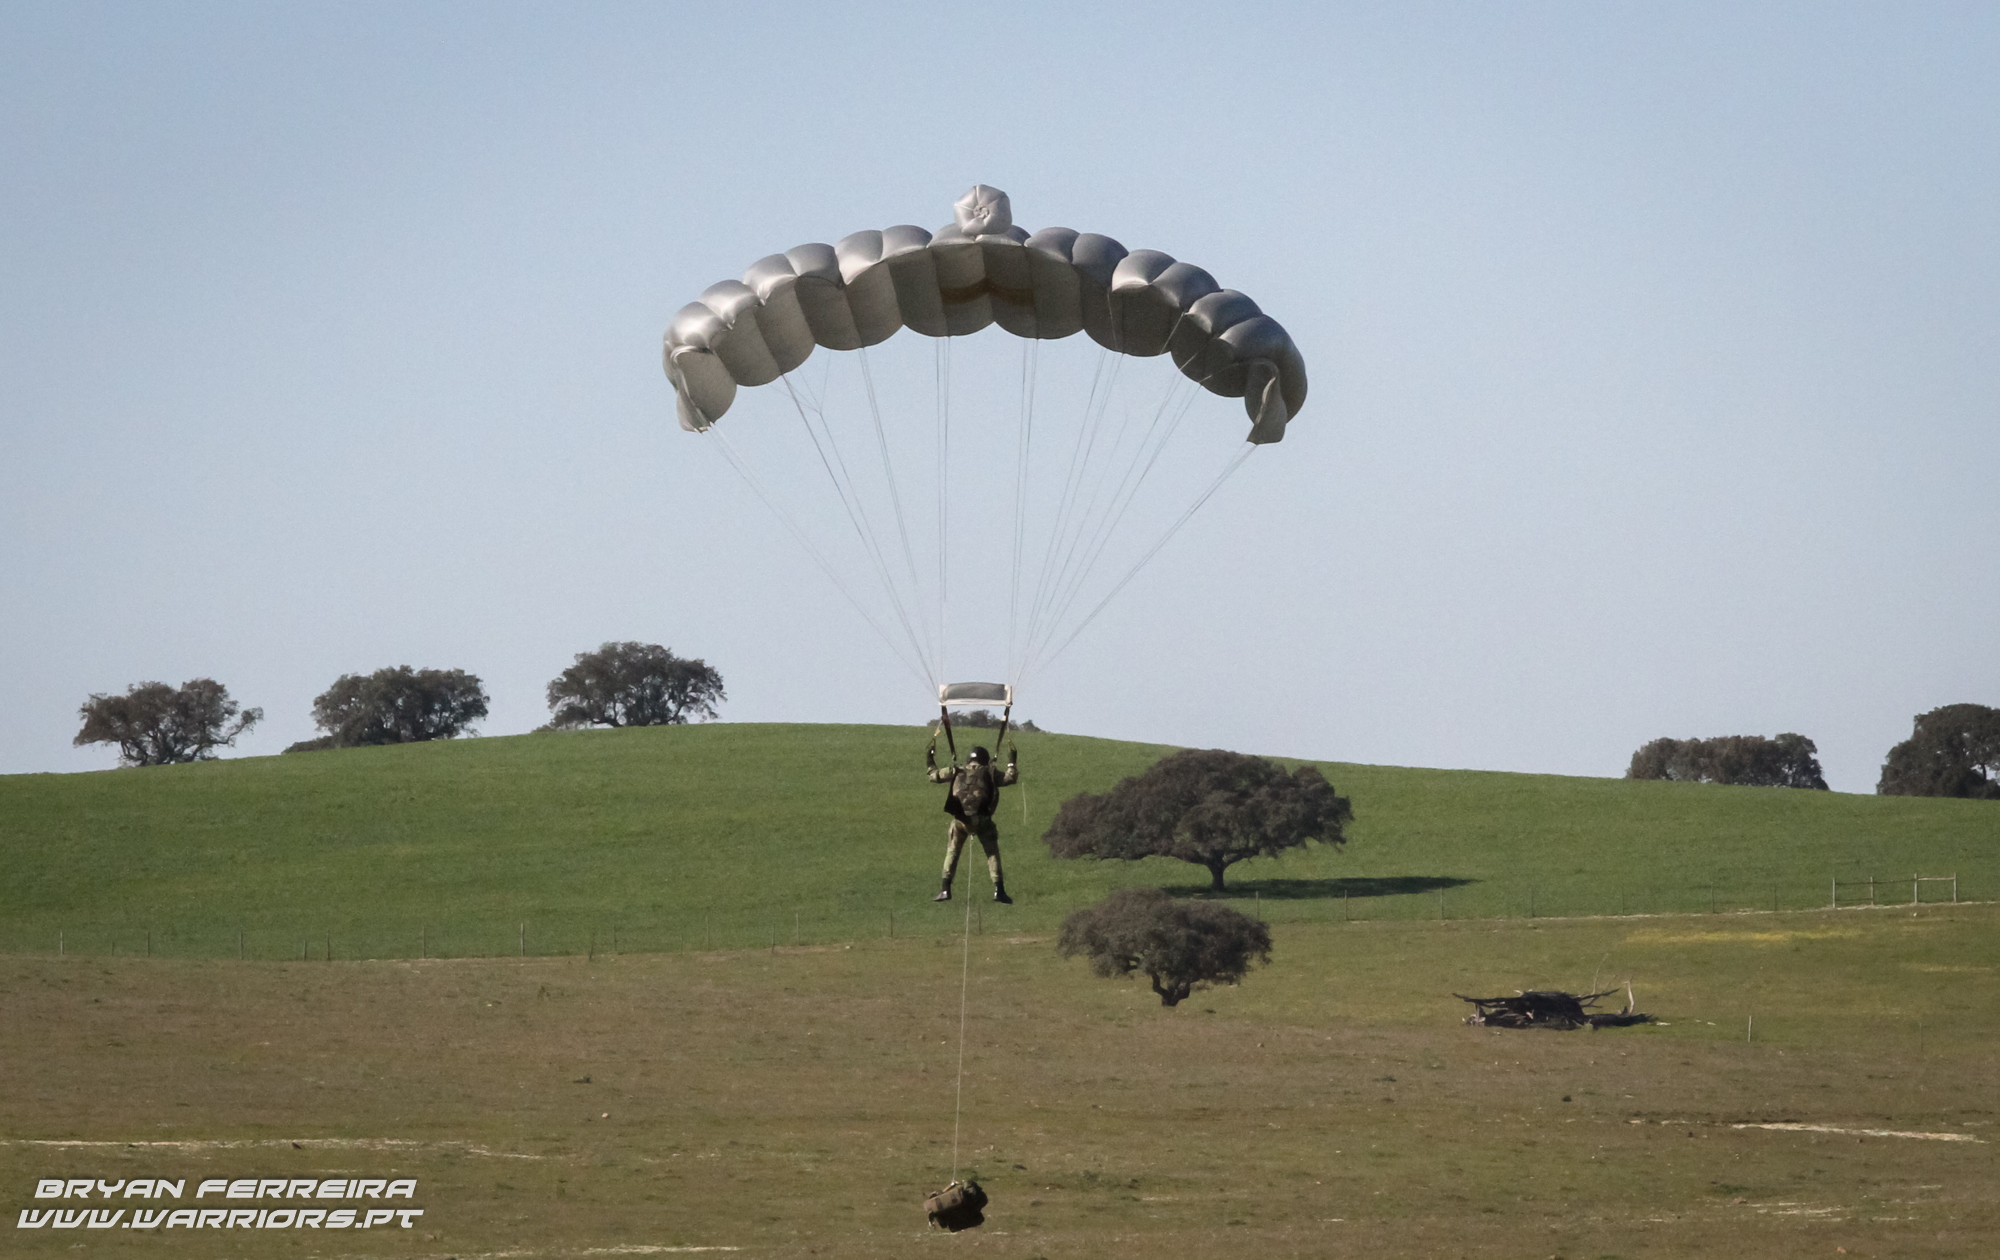 Paraquedista da Companhia de Percursores Aeroterrestres prestes a aterrar numa zona onde irá marcar uma zona de lançamento de Paraquedistas.